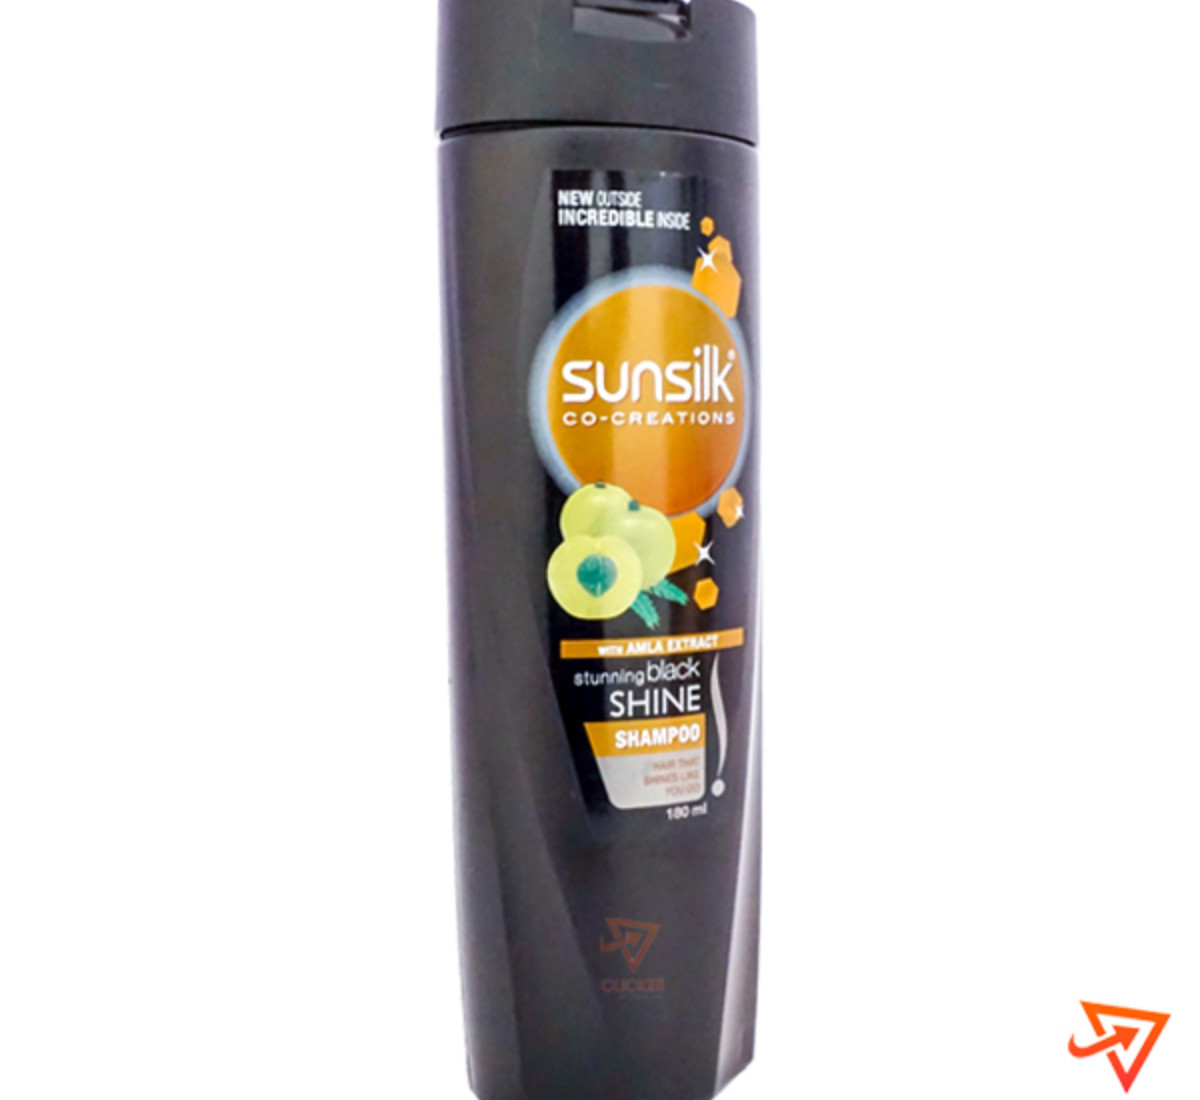 Clicker product 180ml SUNSILK staning blackshine shampoo 1121